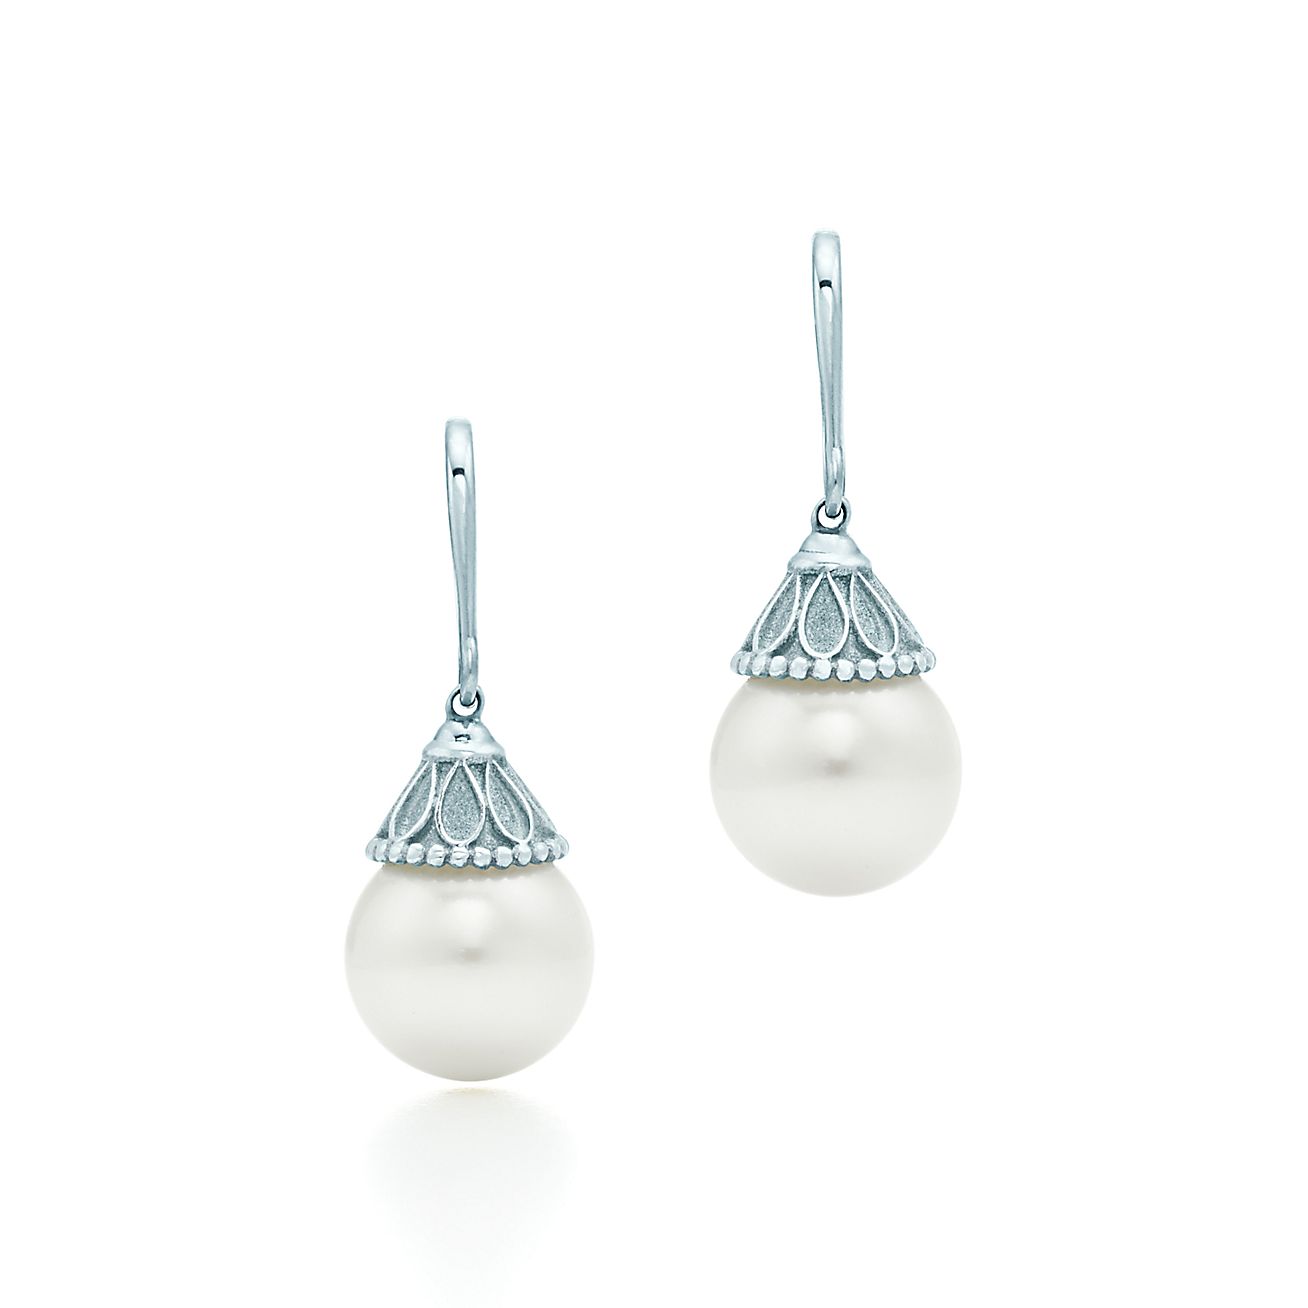 Ziegfeld Collection pearl earrings in sterling silver. | Tiffany & Co.